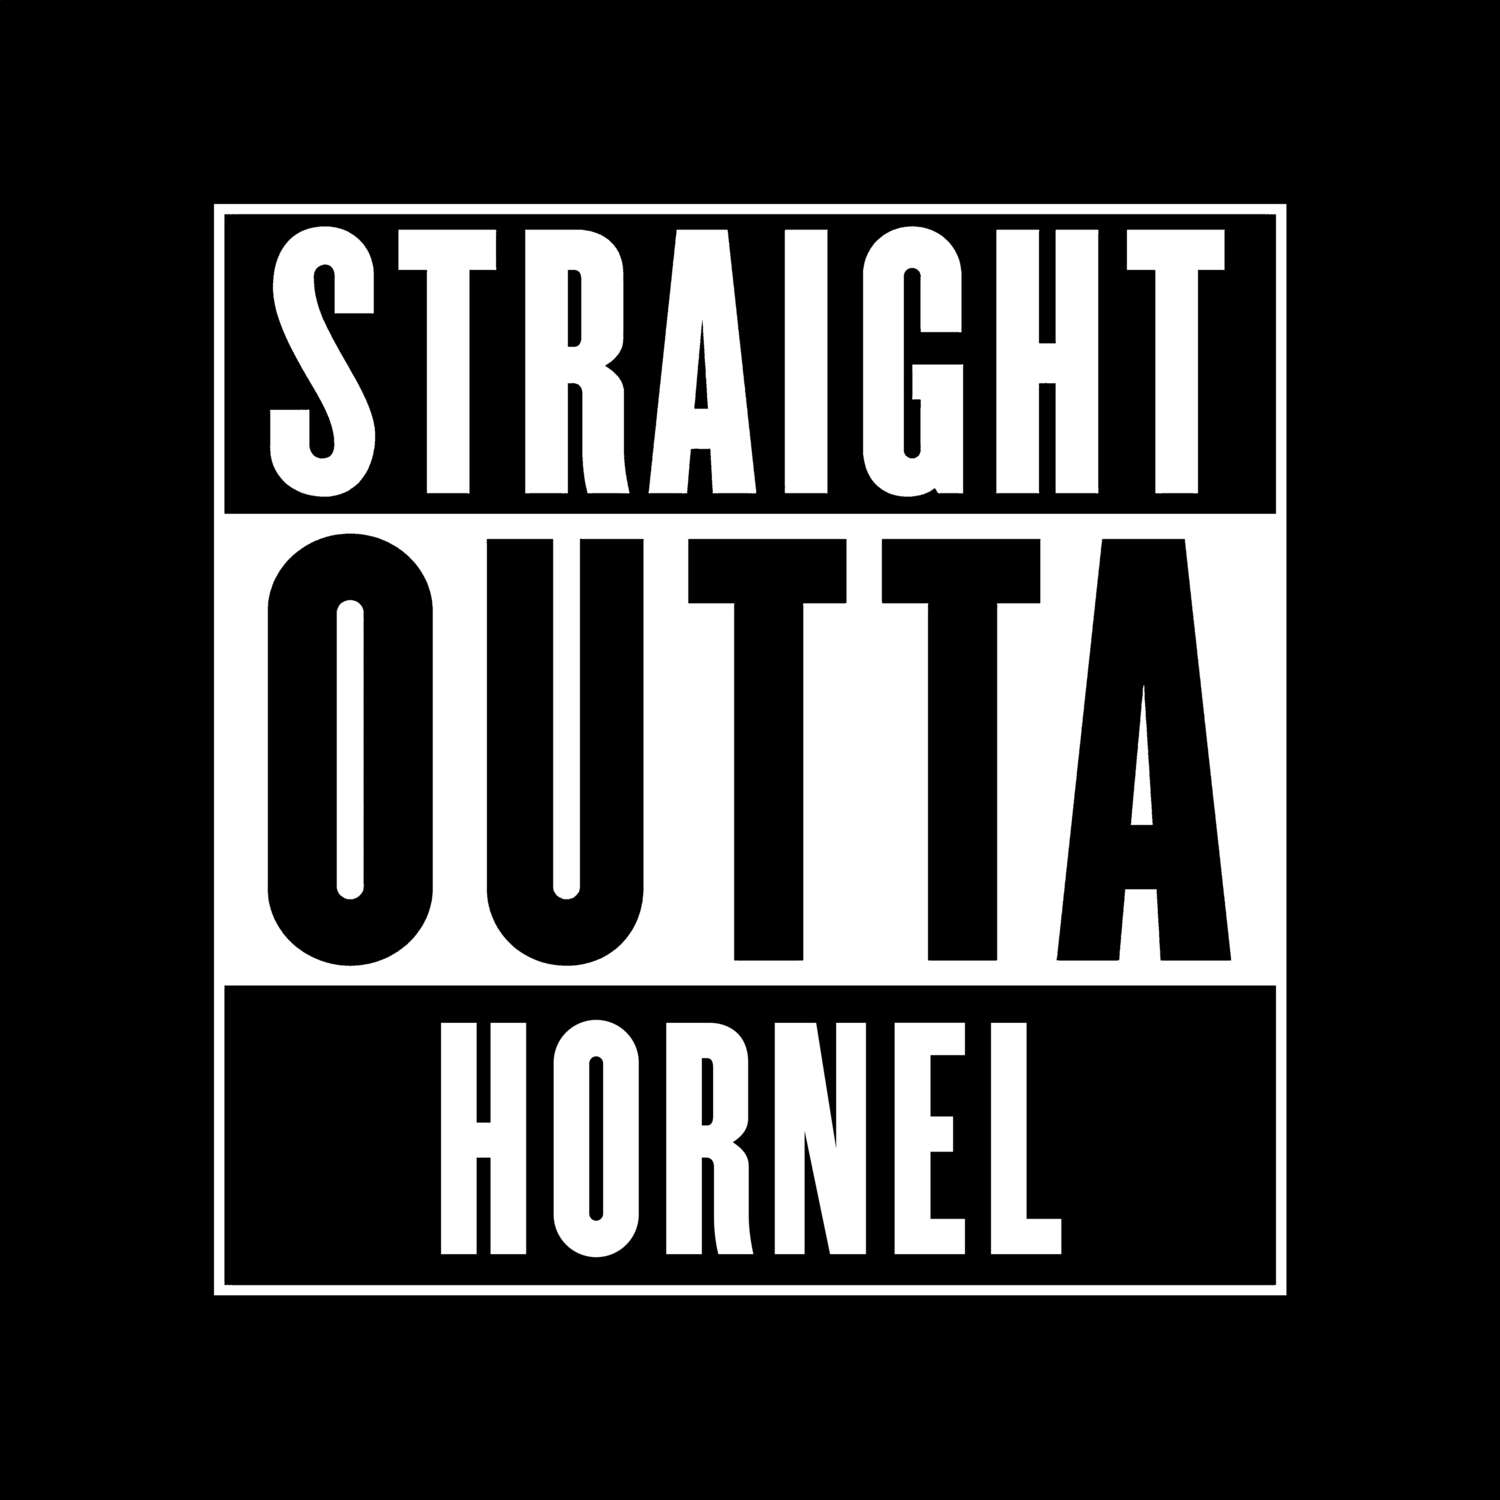 Hornel T-Shirt »Straight Outta«